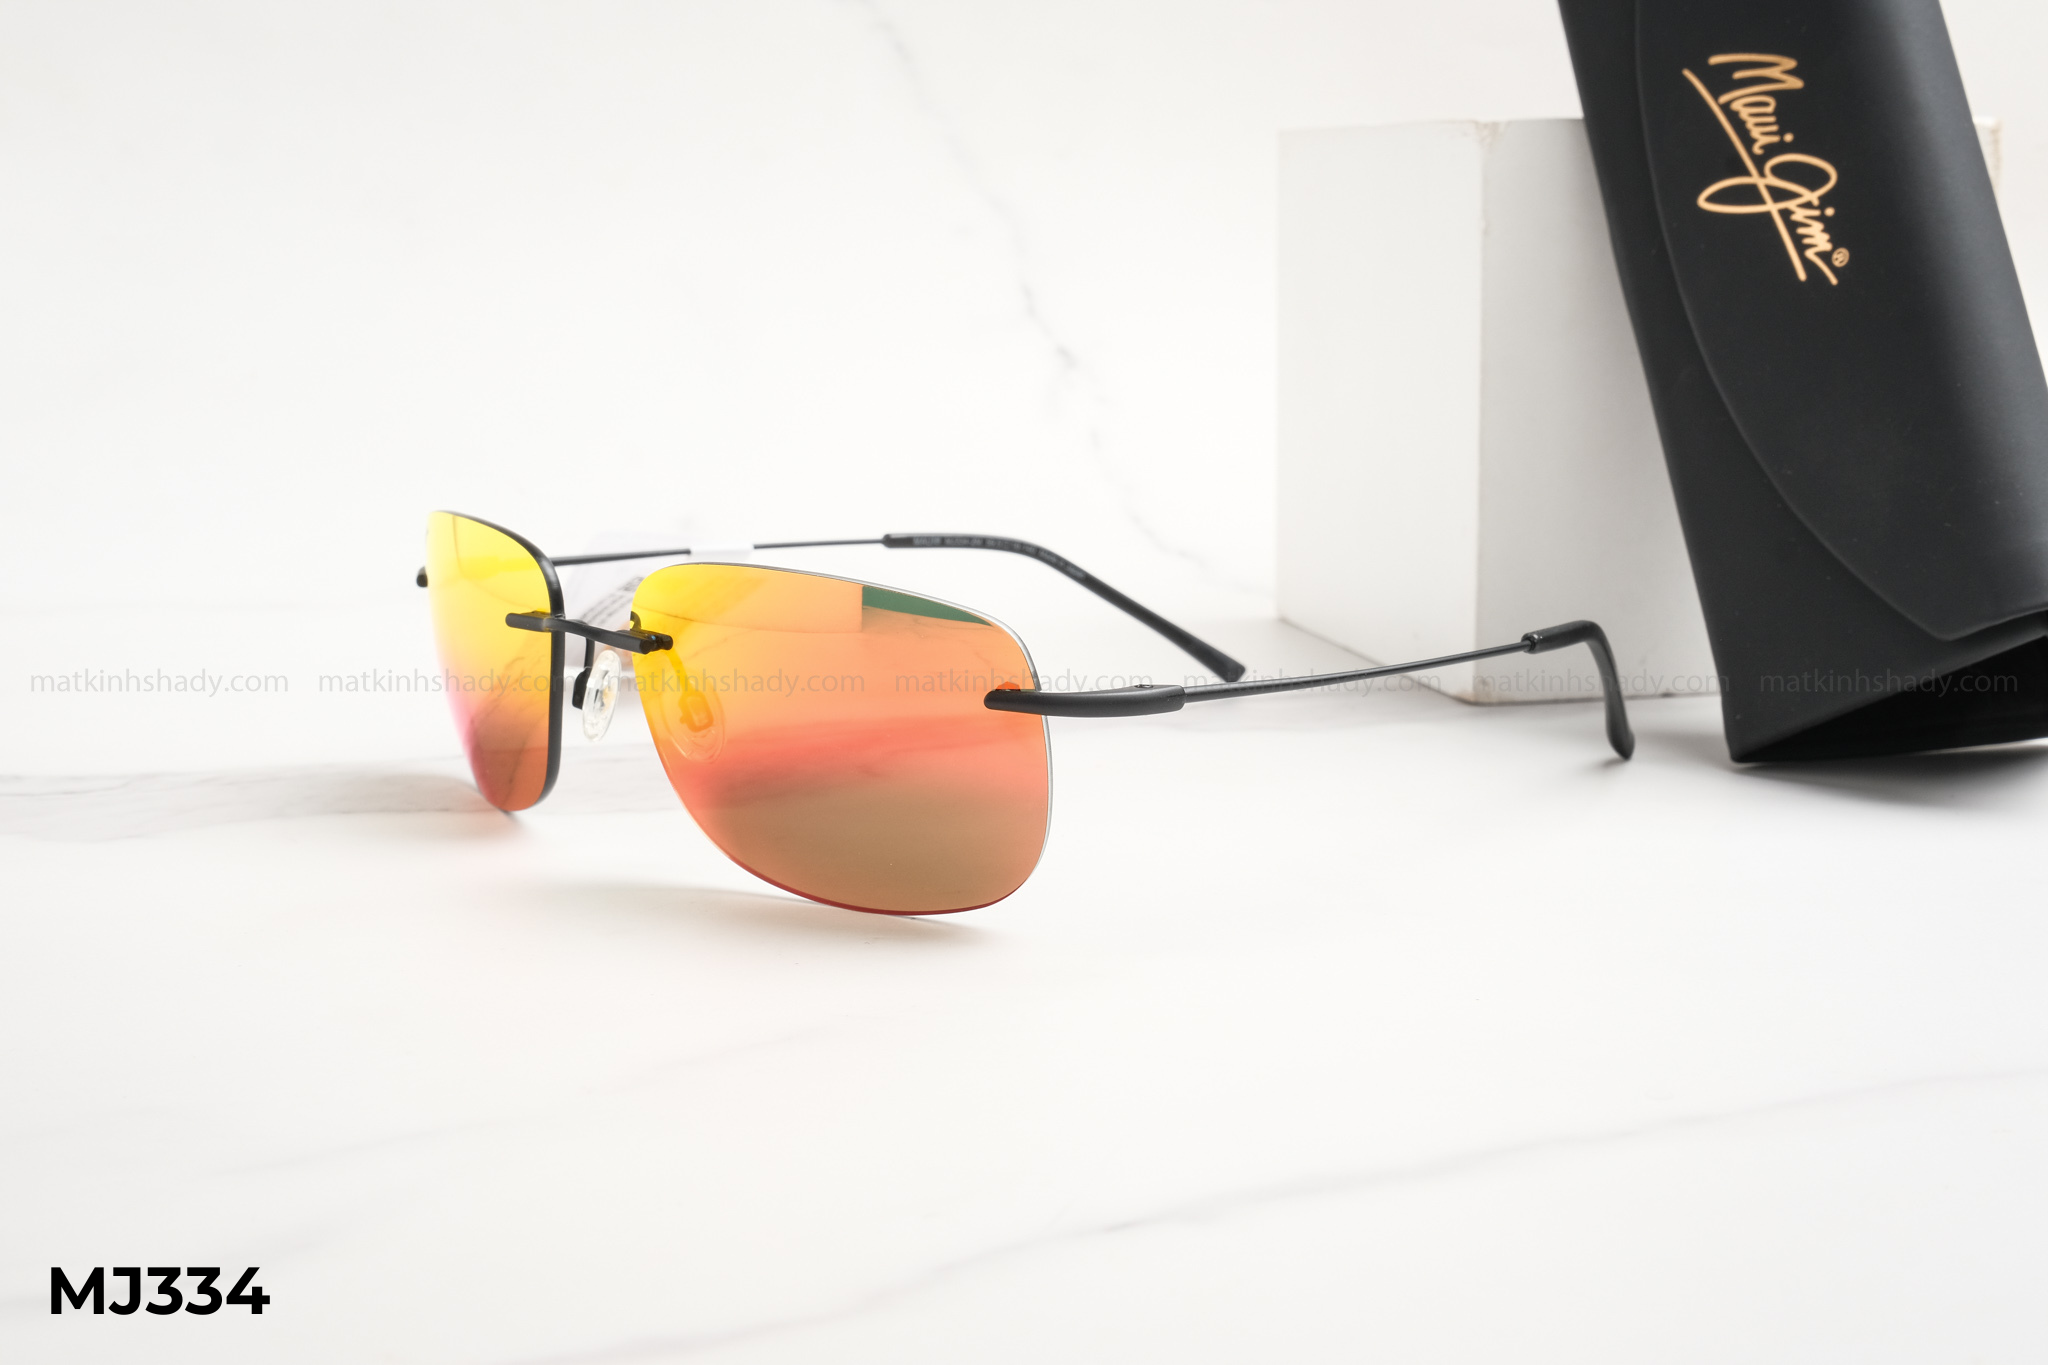  Maui Jim Eyewear - Sunglasses - MJ334 